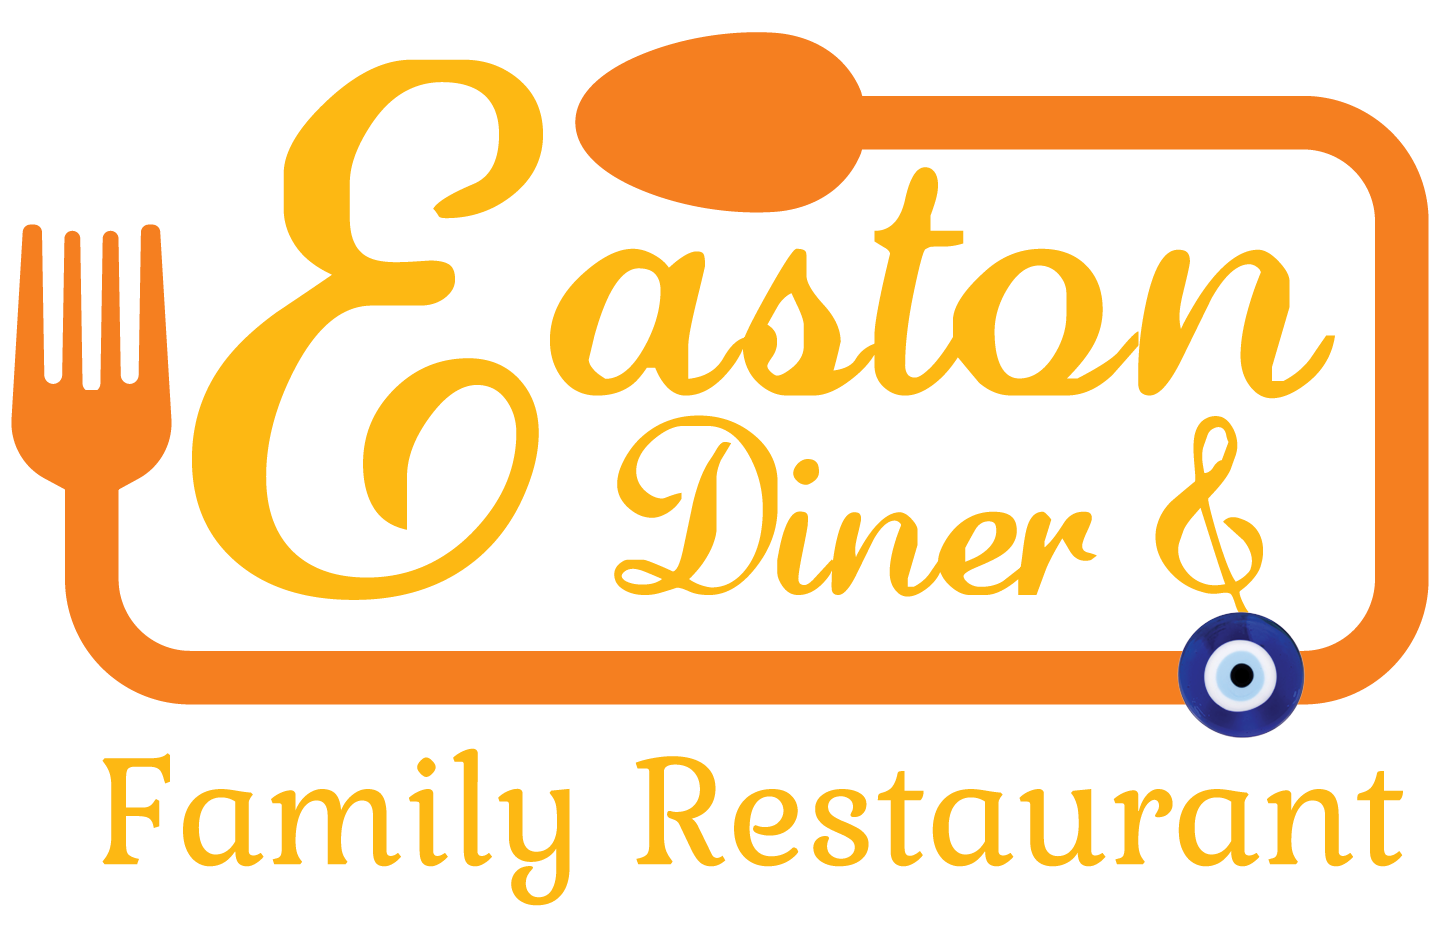 Family Restaurant with Full Service Bar